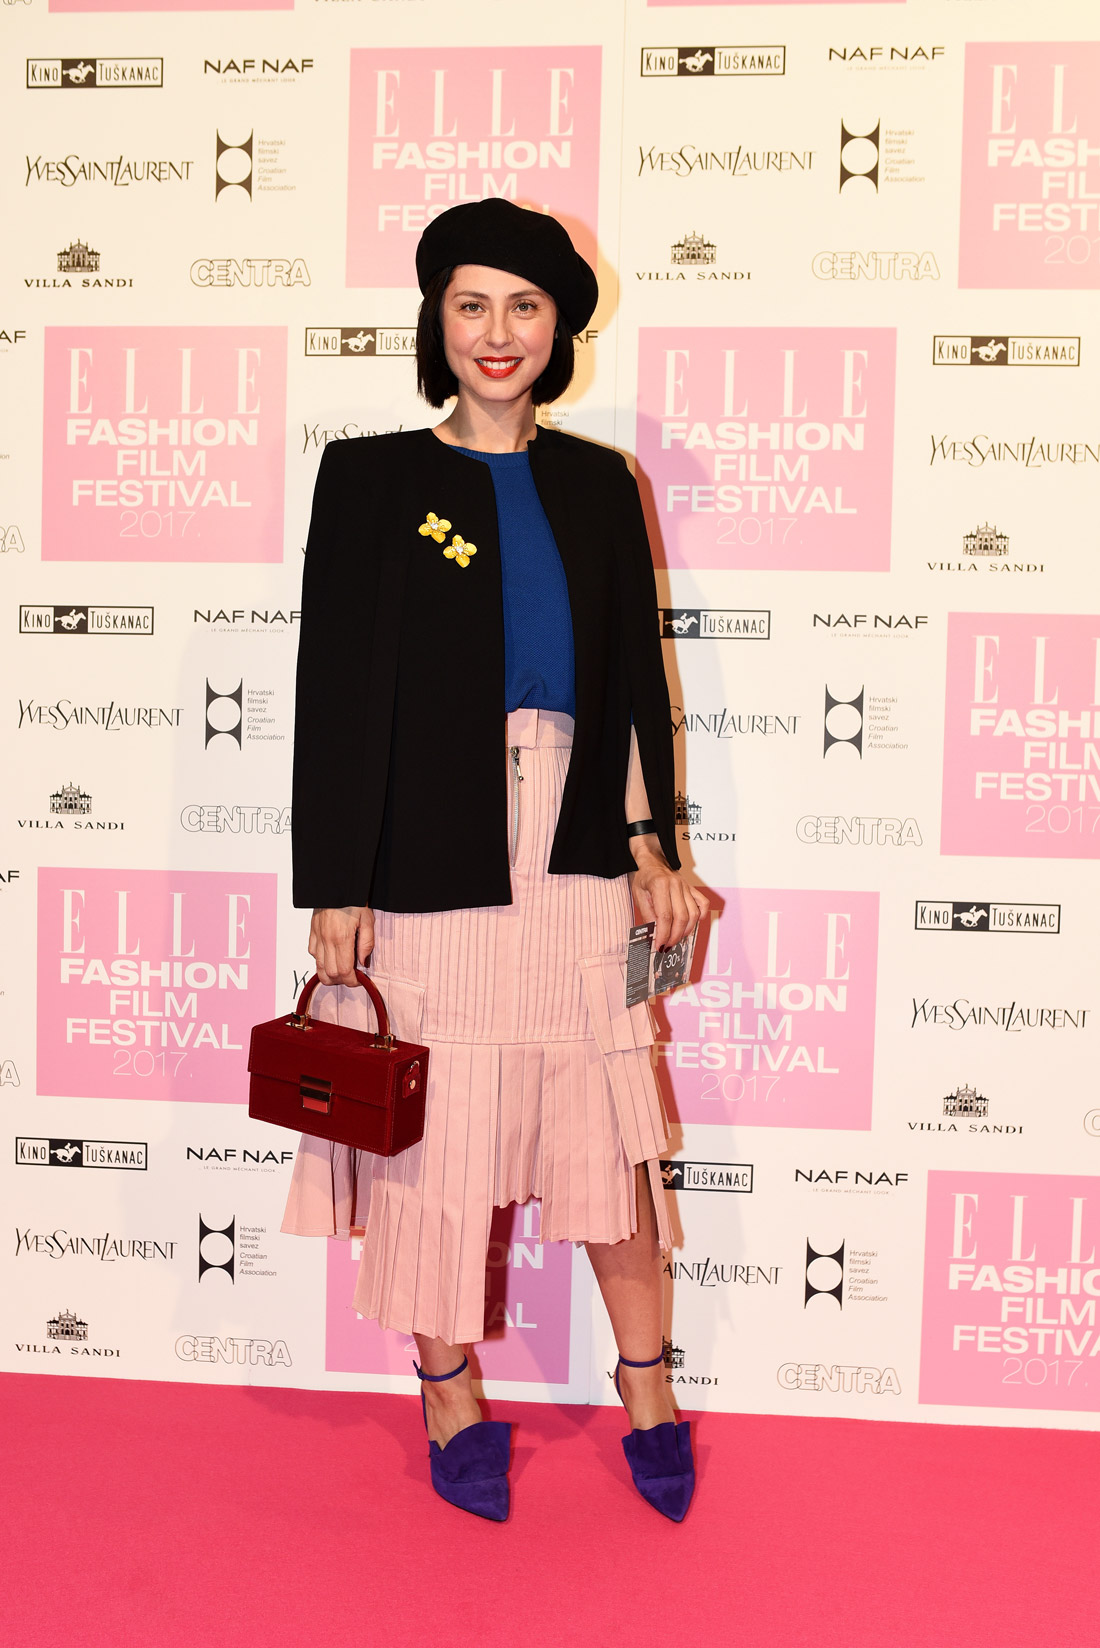 Elle Fashion Film Festival